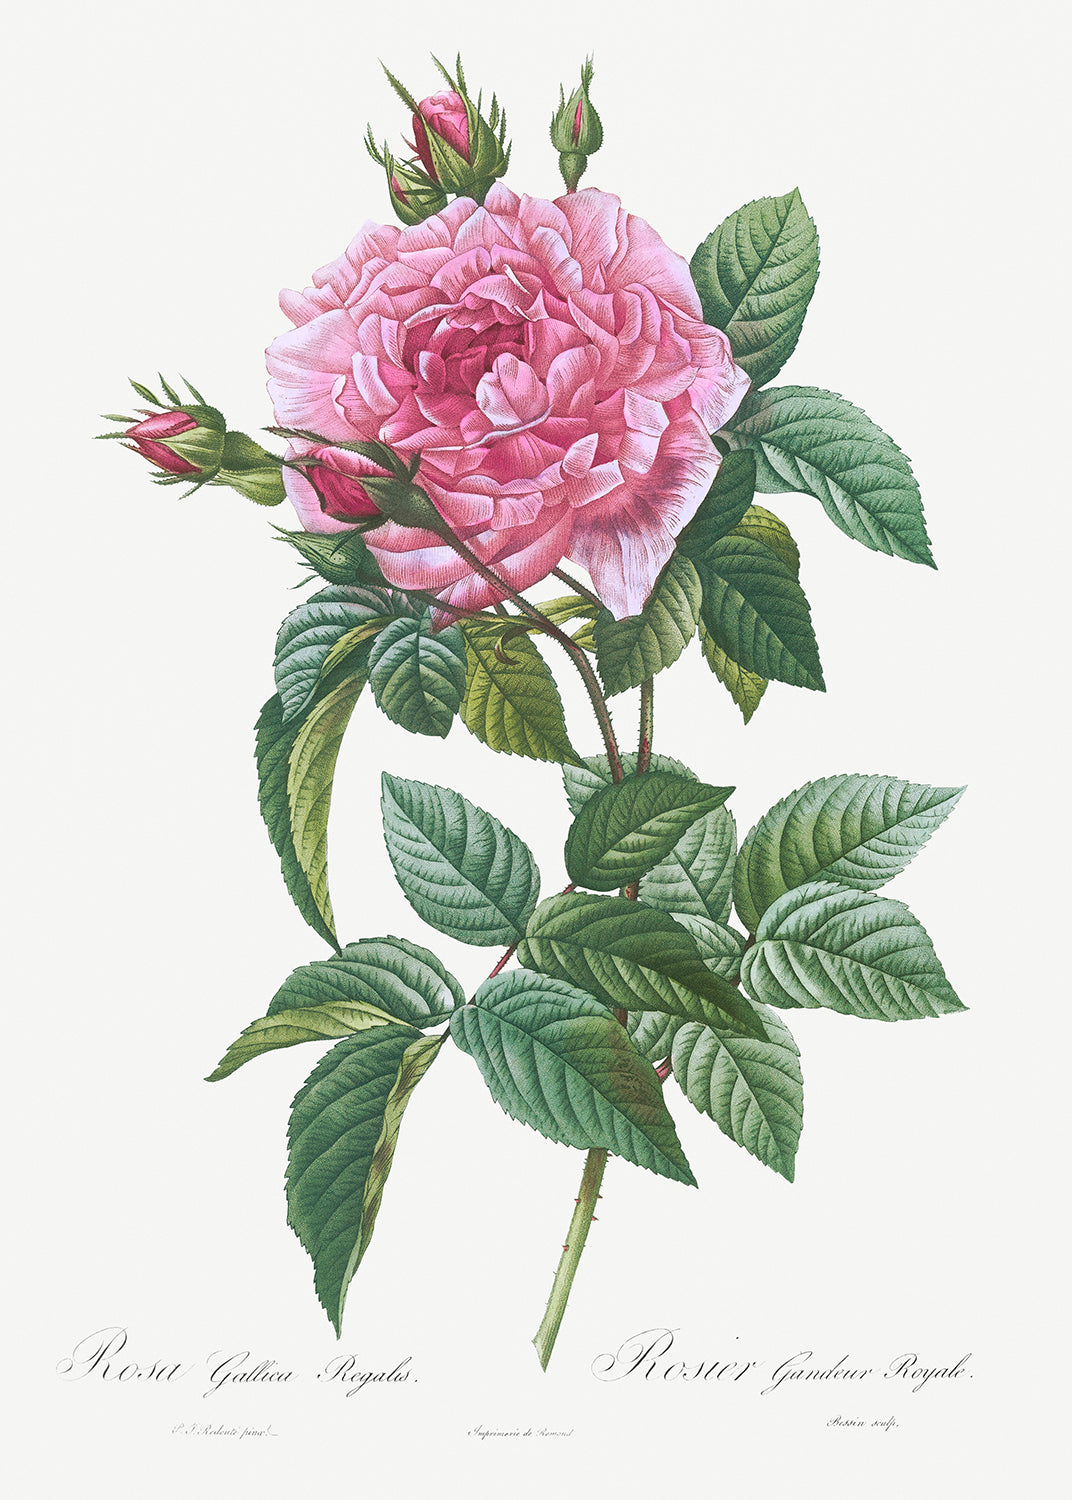 Botanical Plant Print - Gallic Rose, Rosa gallica regalis by Pierre Joseph Redoute